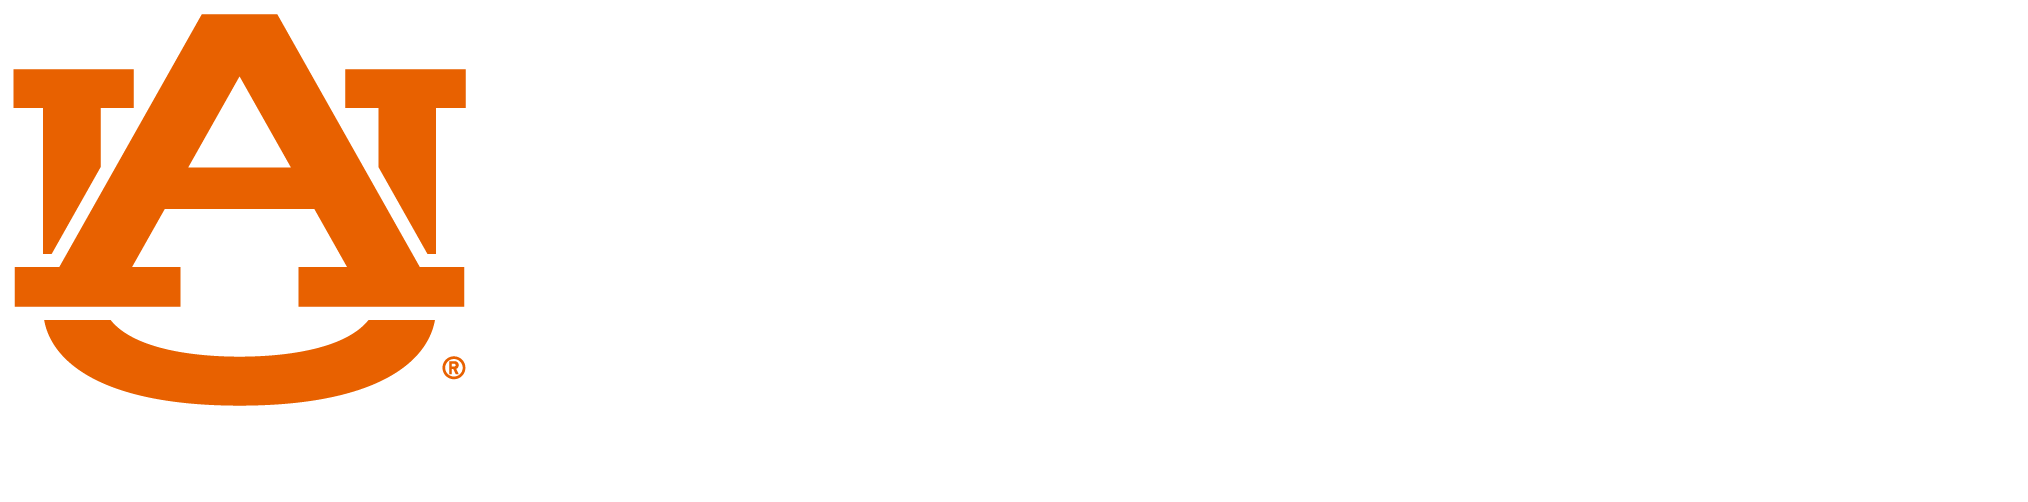 Auburn University homepage